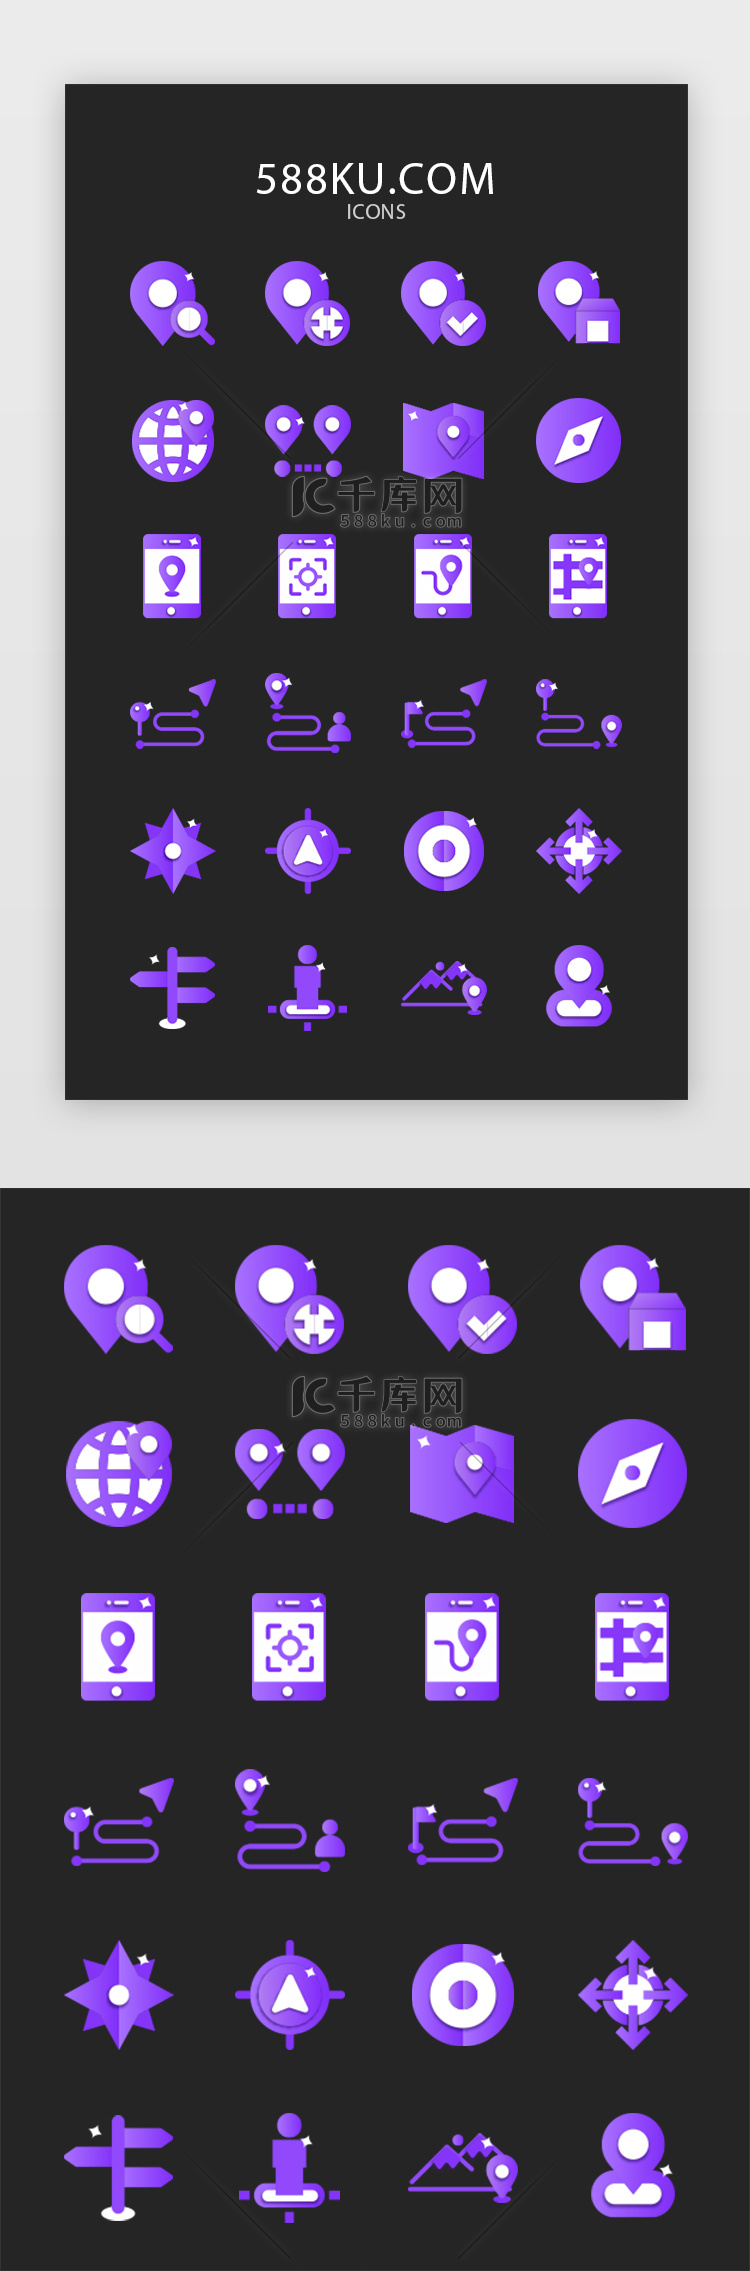 紫色渐变定位图标icon